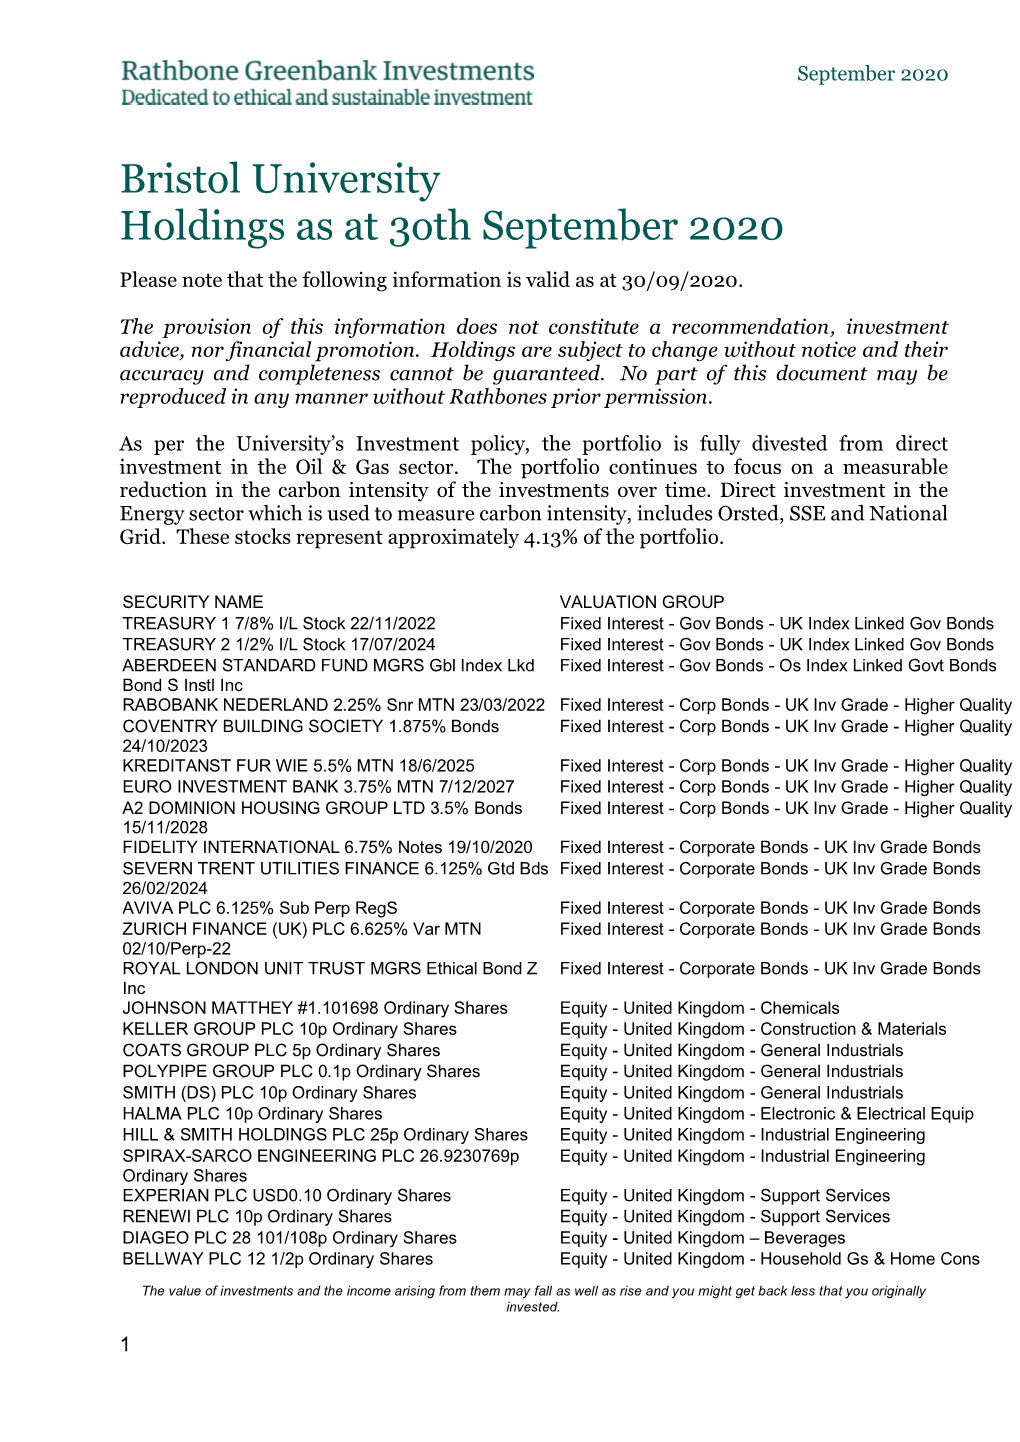 Bristol University Holdings As at 3Oth September 2020